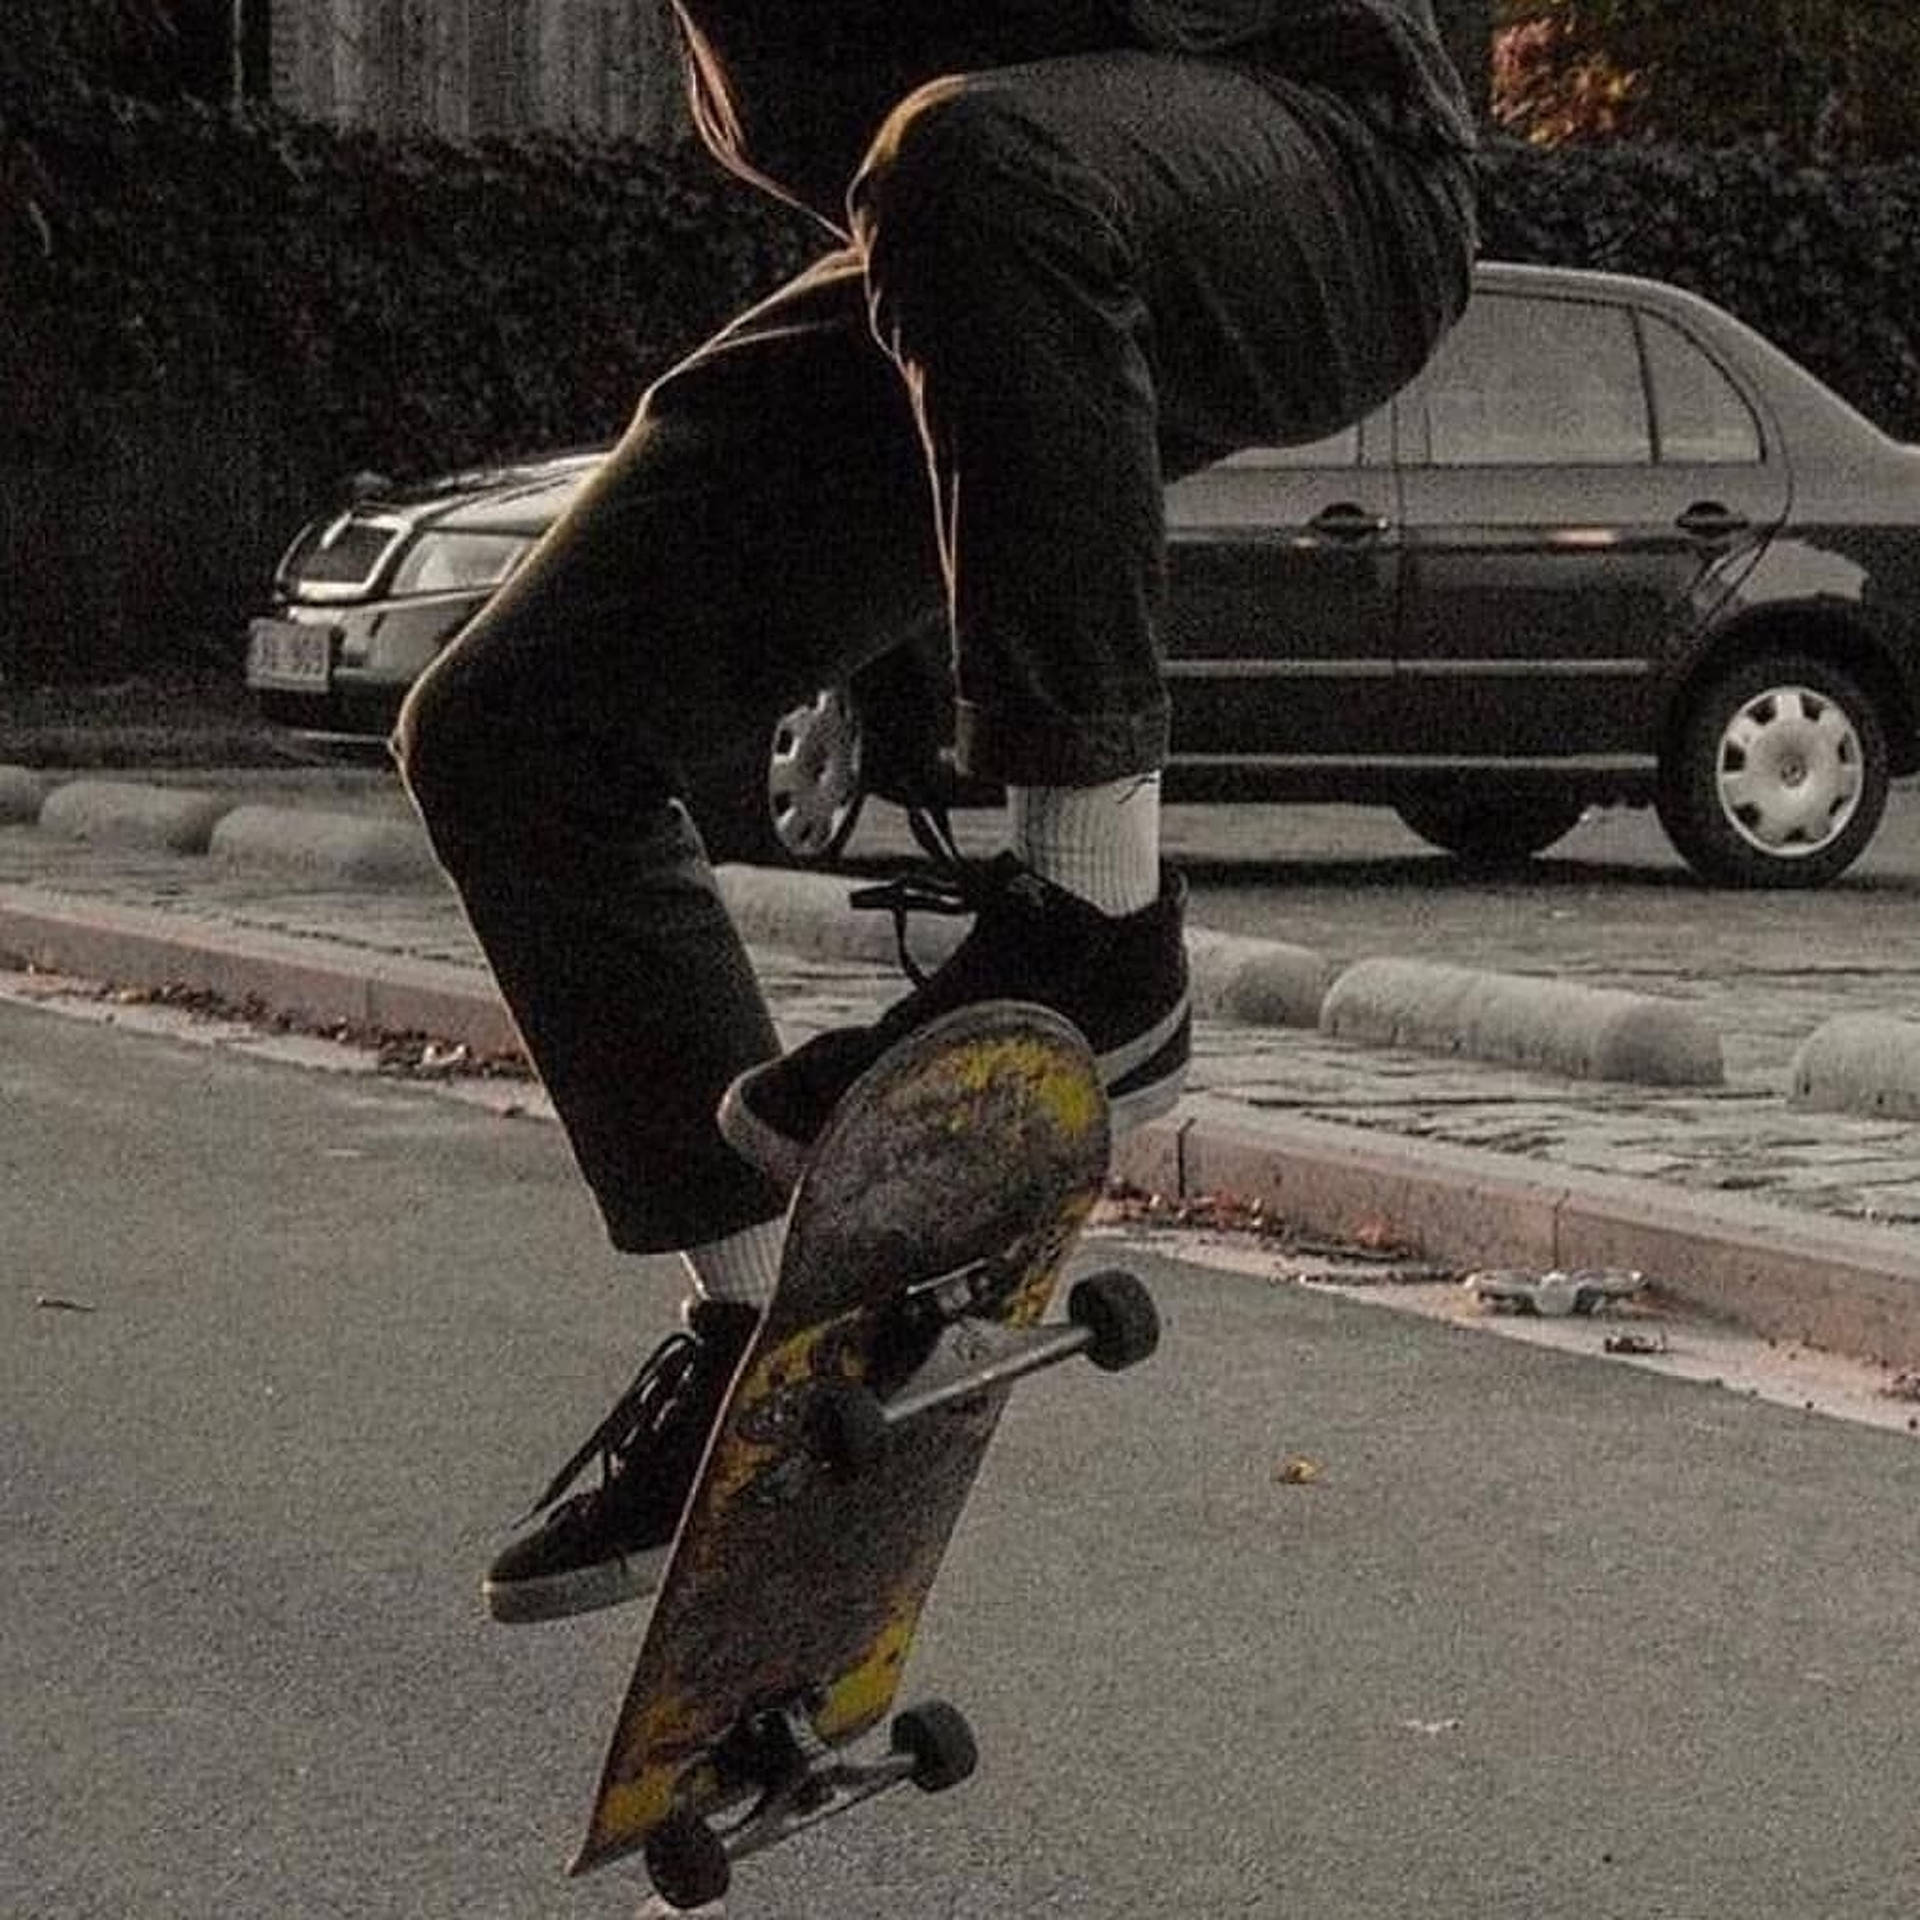 Skater Boy In Action Aesthetic Background